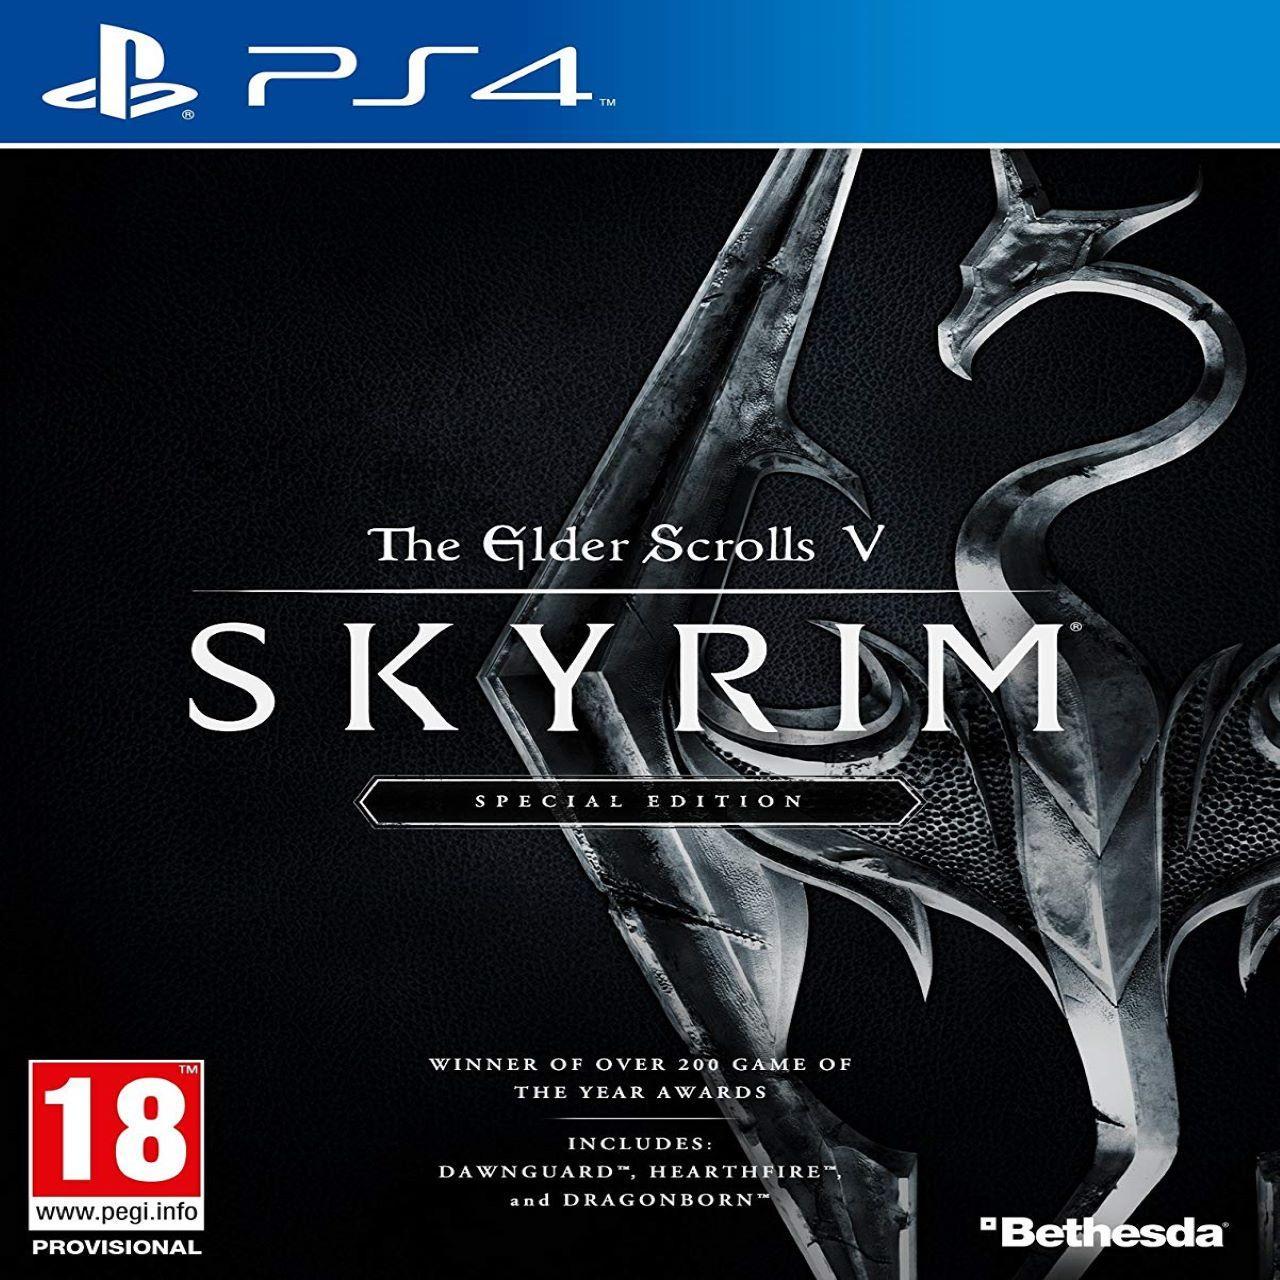 The Elder Scrolls V: Skyrim (Special Edition) (російська версія) PS4Нет в наличии